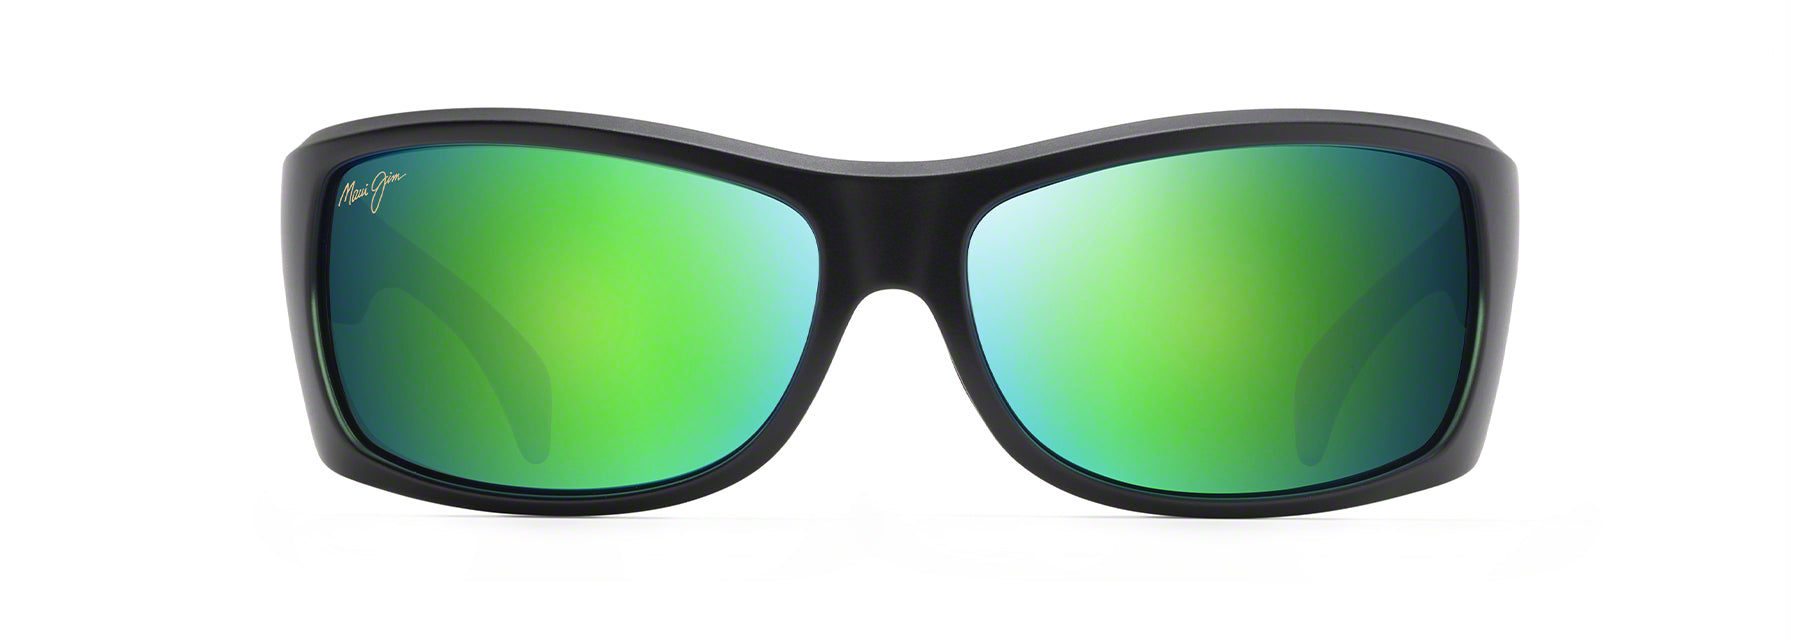 Maui Jim Equator Sunglasses